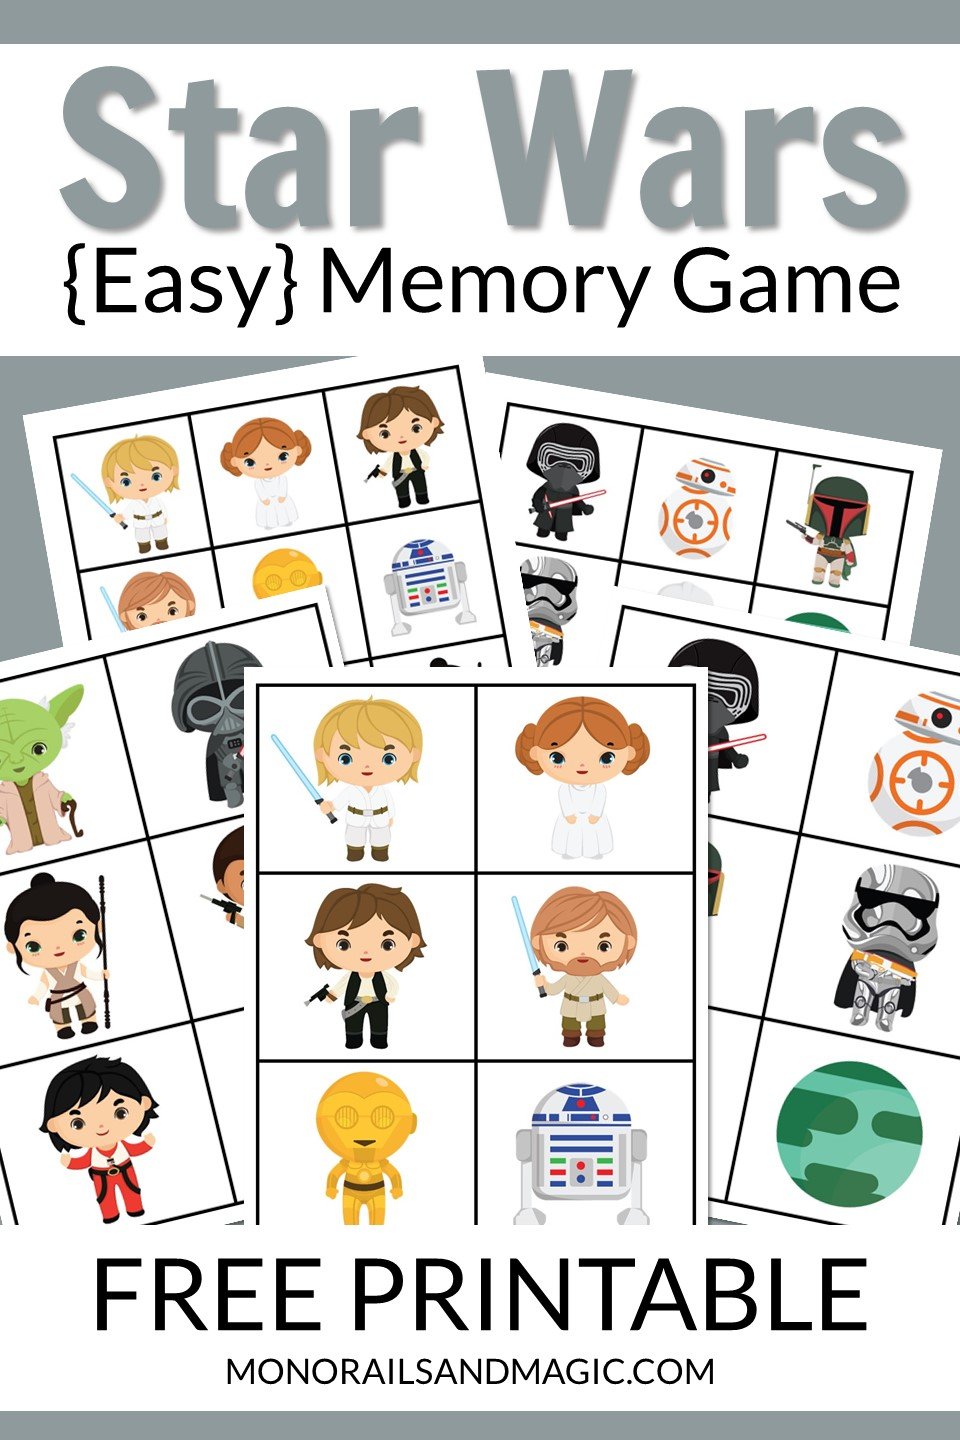 Free printable Star Wars memory game for kids.